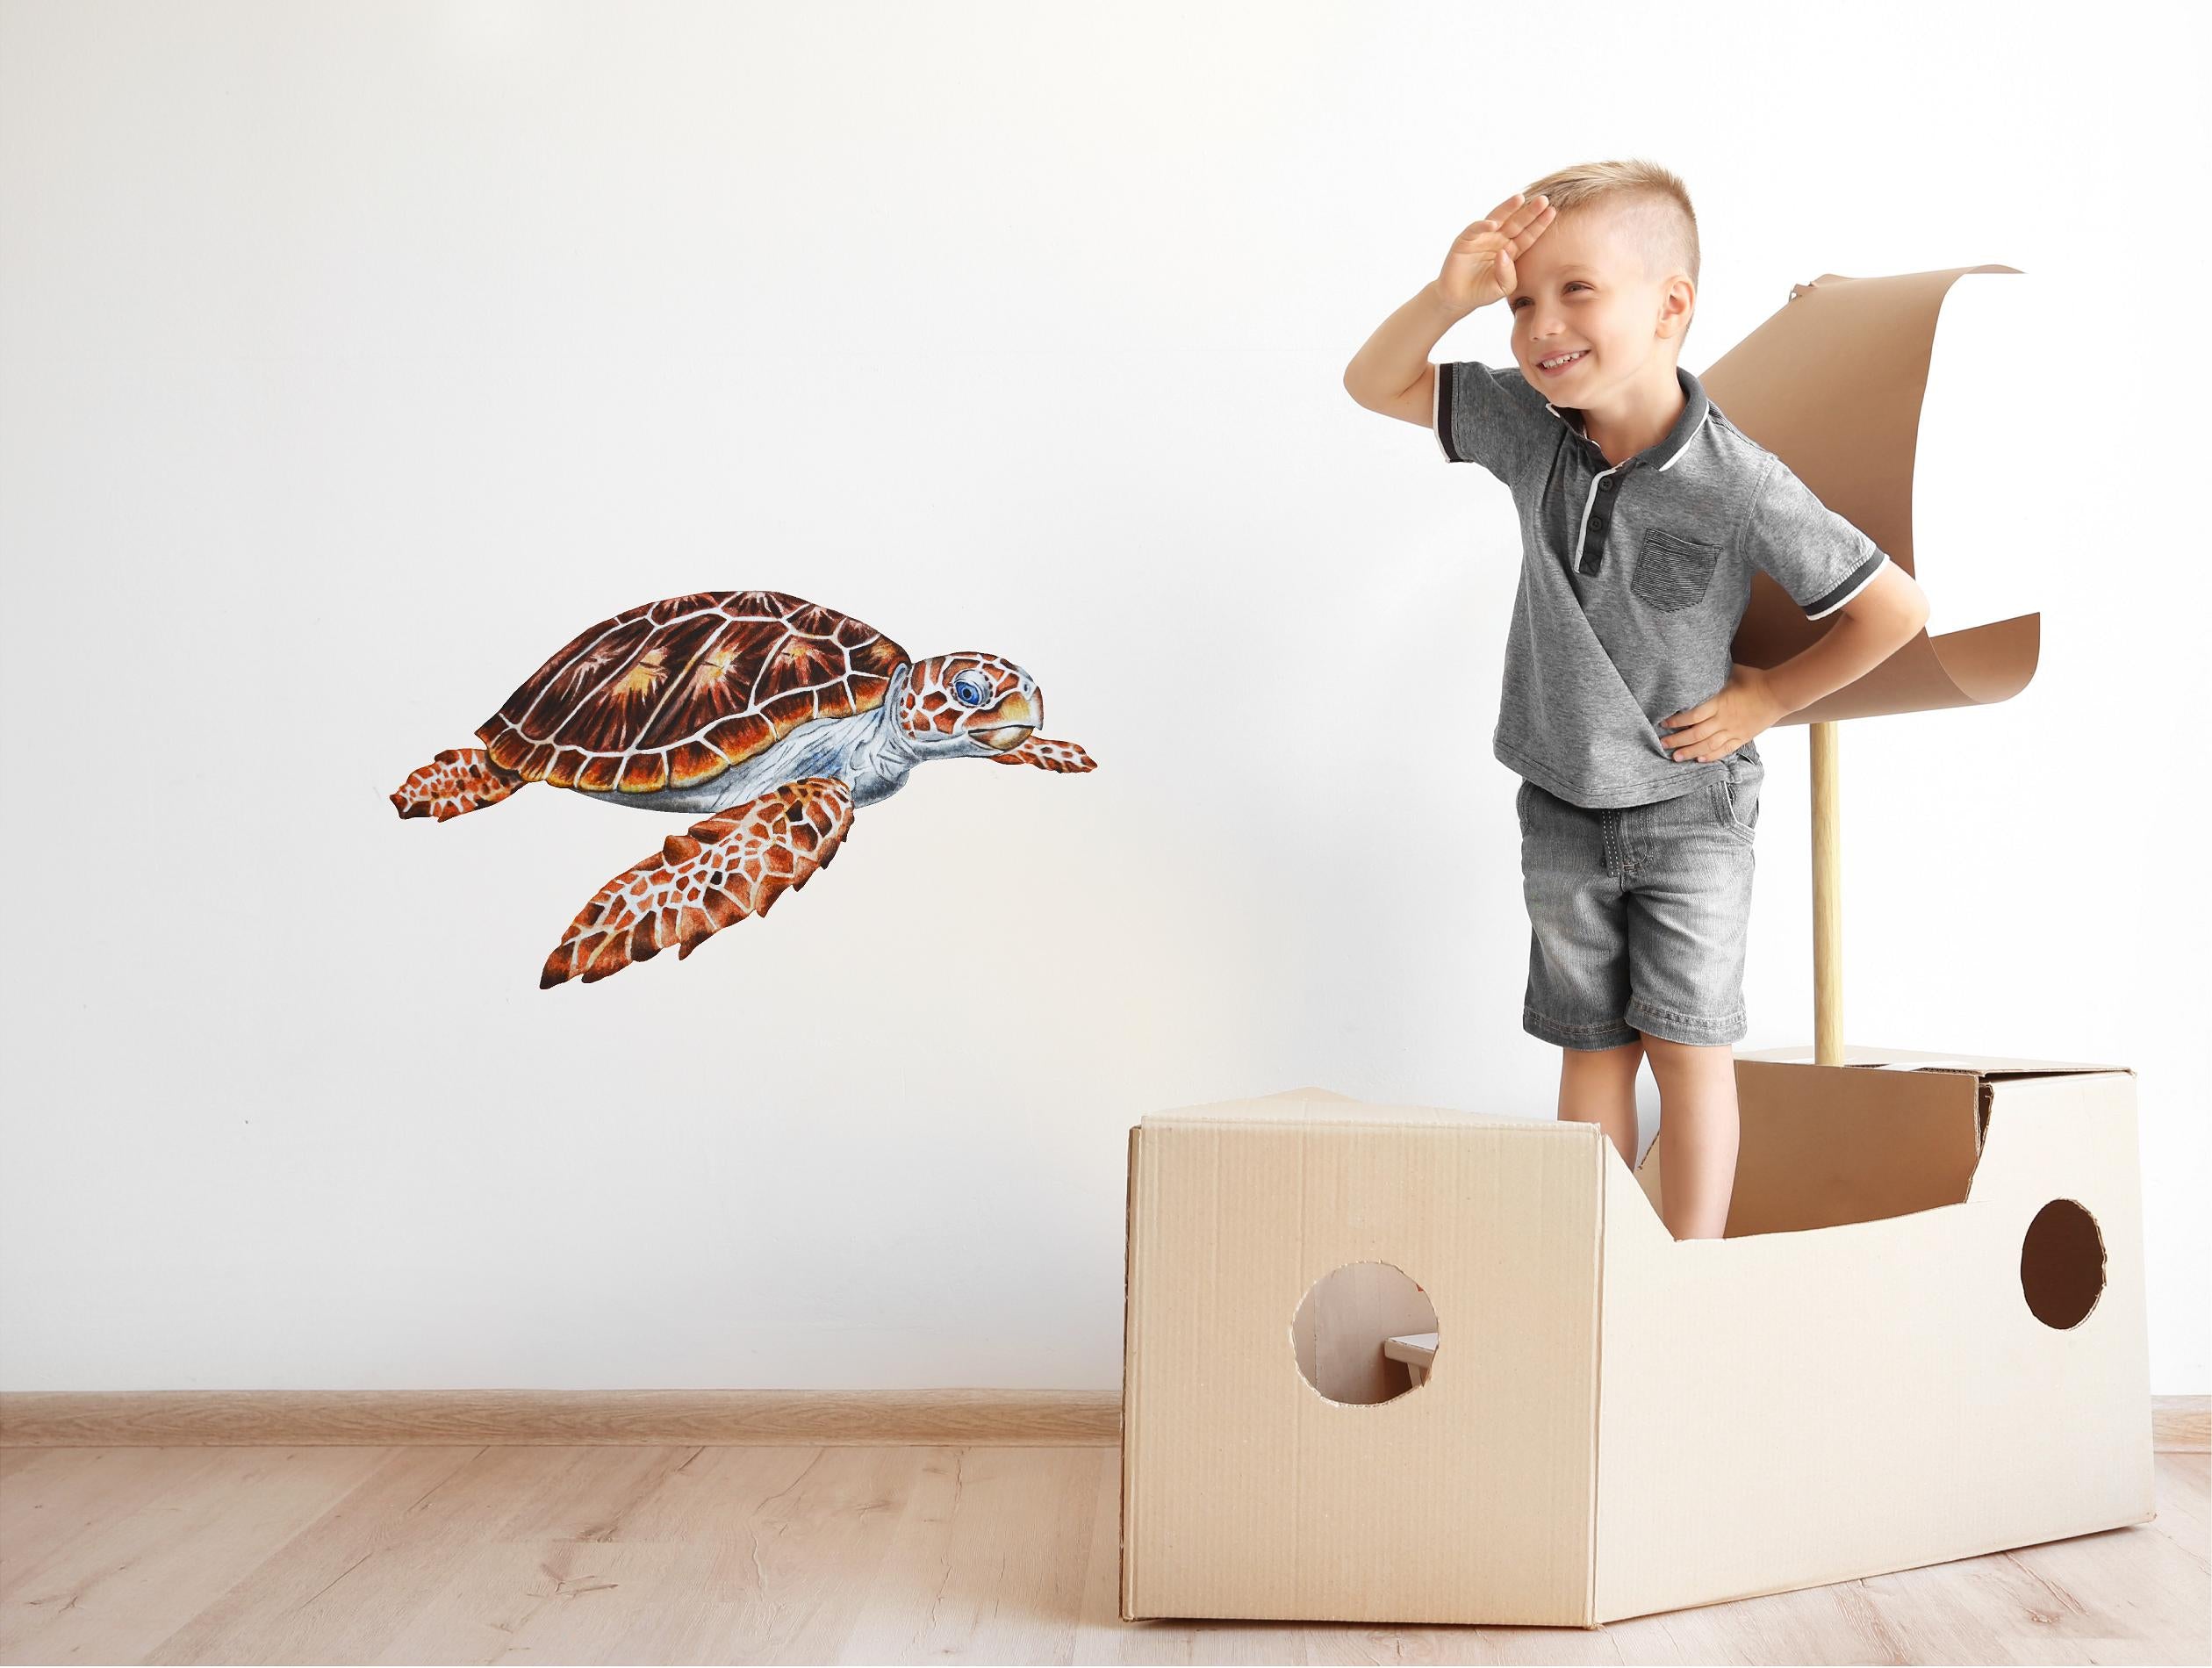 Brown Sea Turtle Wall Decal Removable Fabric Vinyl Watercolor Ocean Sea Animal Wall Sticker | DecalBaby